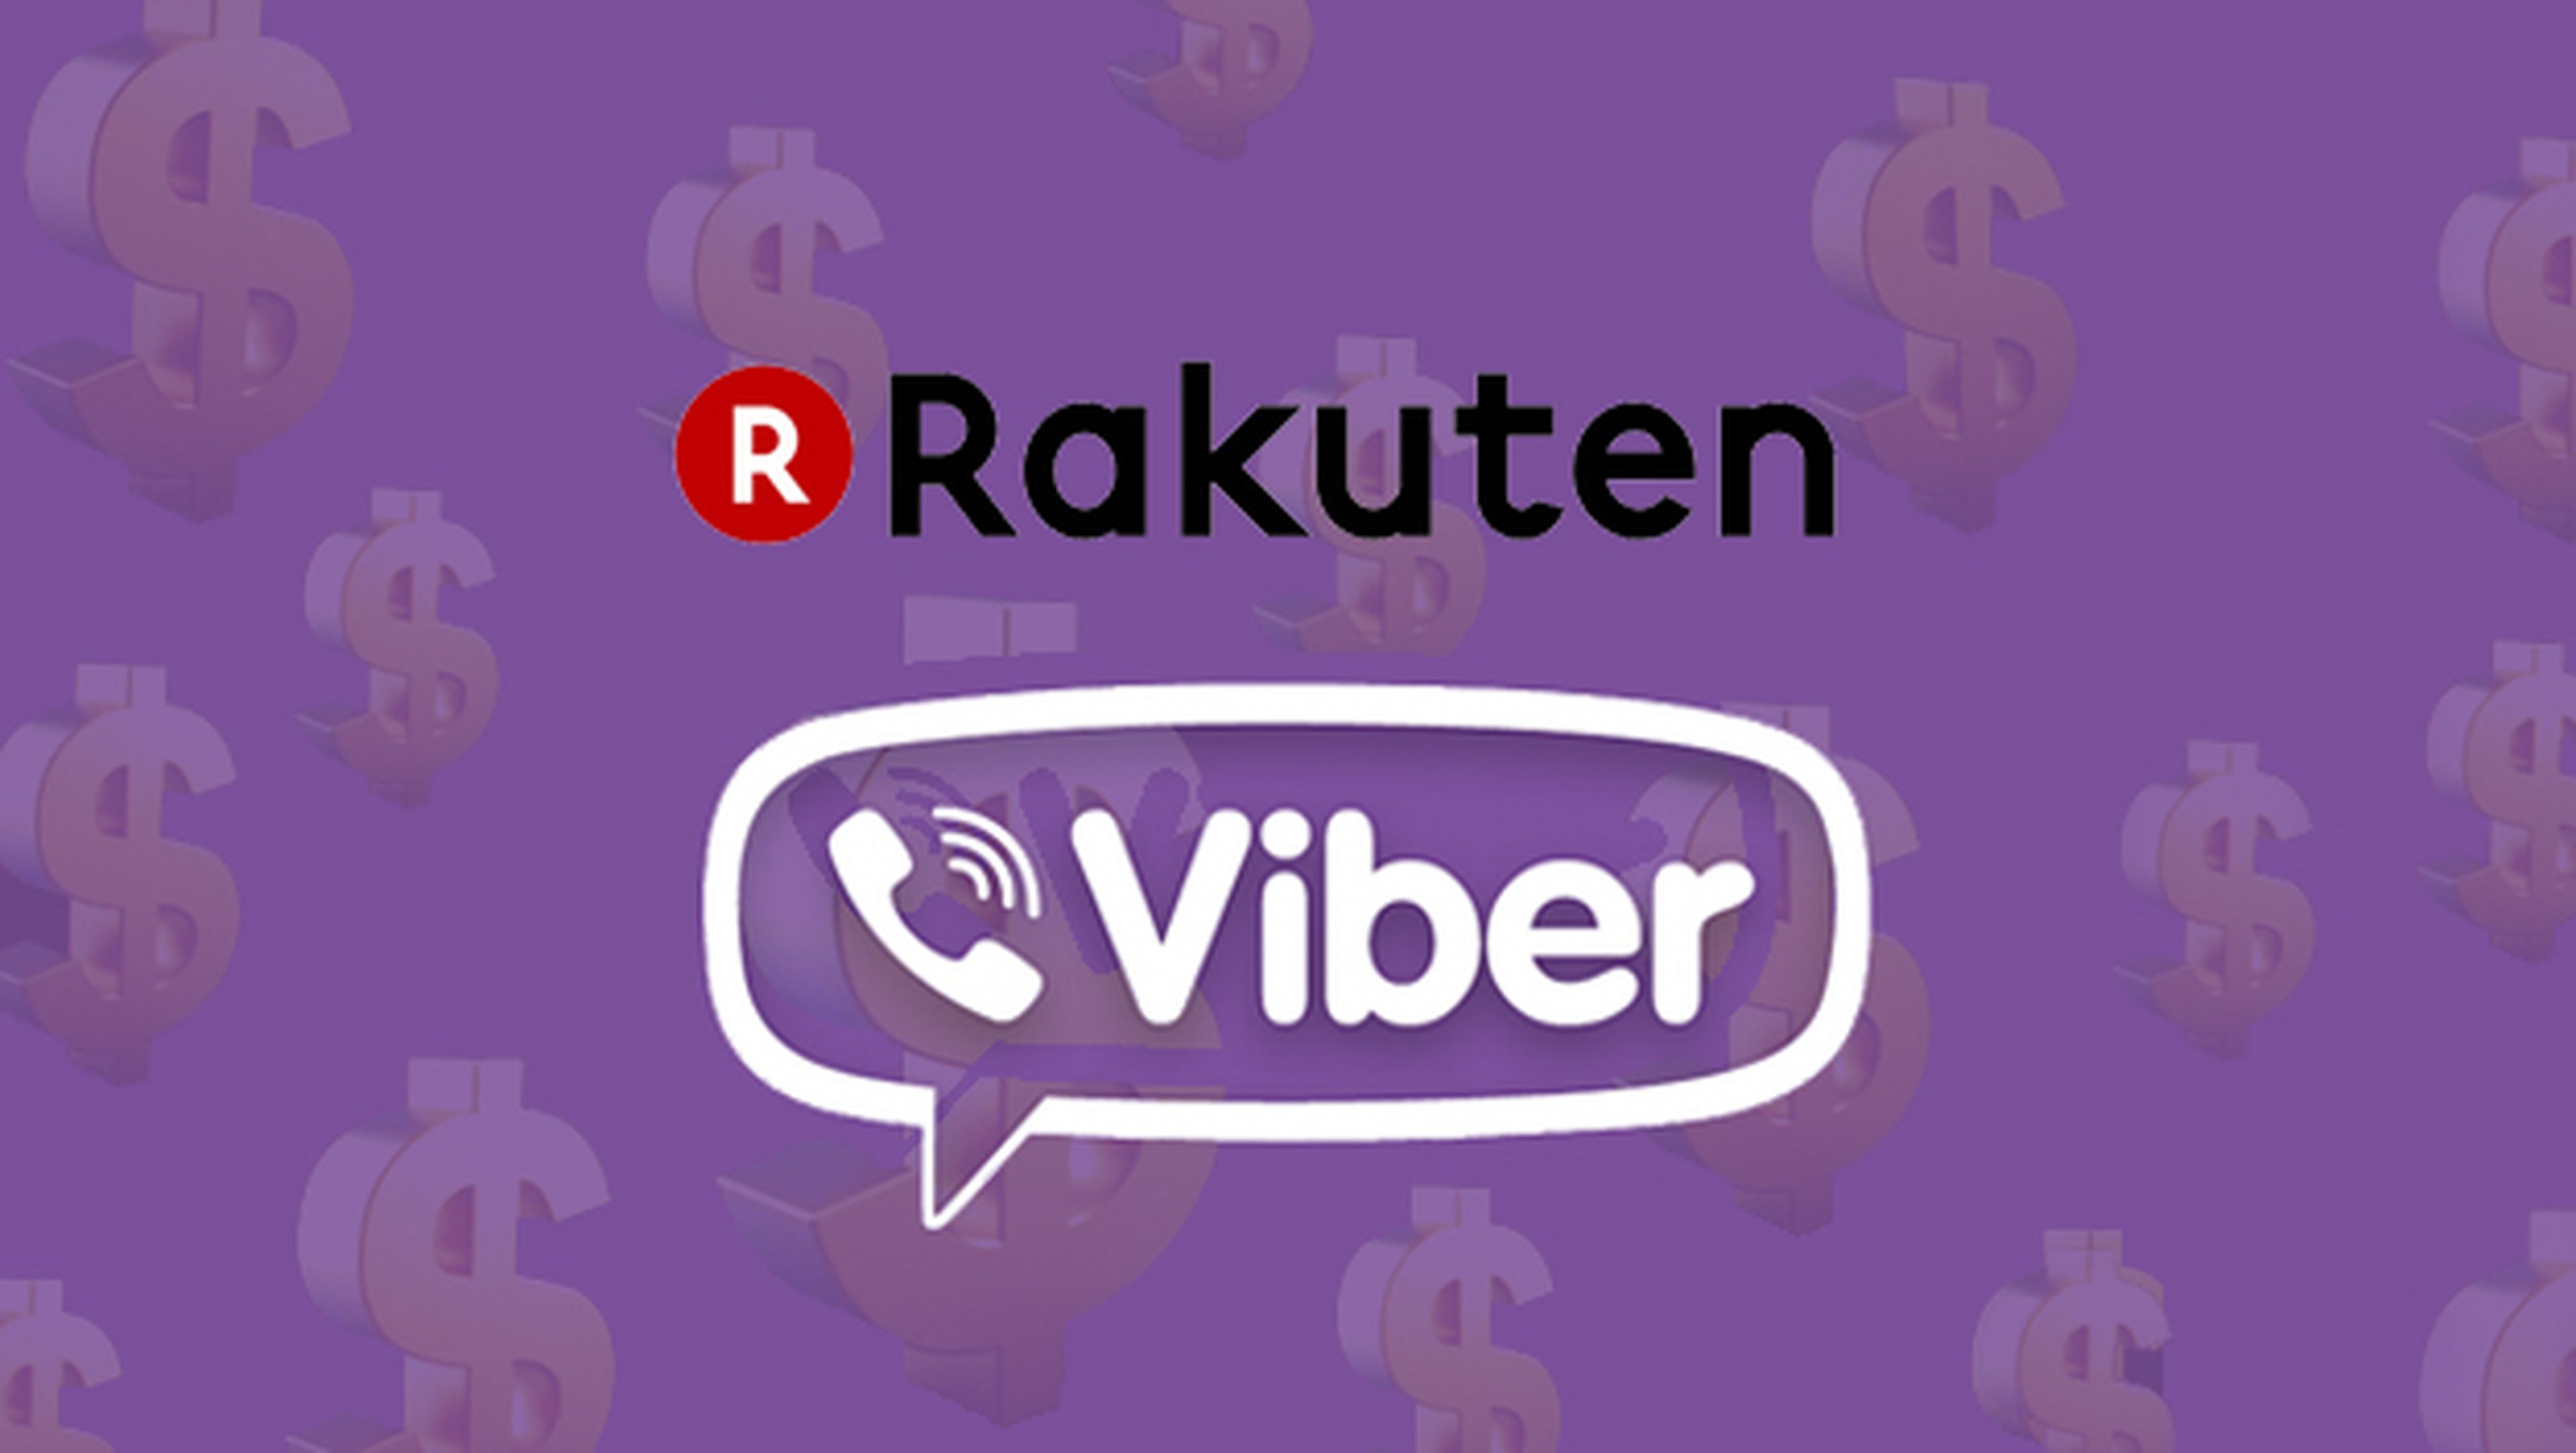 Rakuten compra Viber y se prepara para luchar con WhatsApp